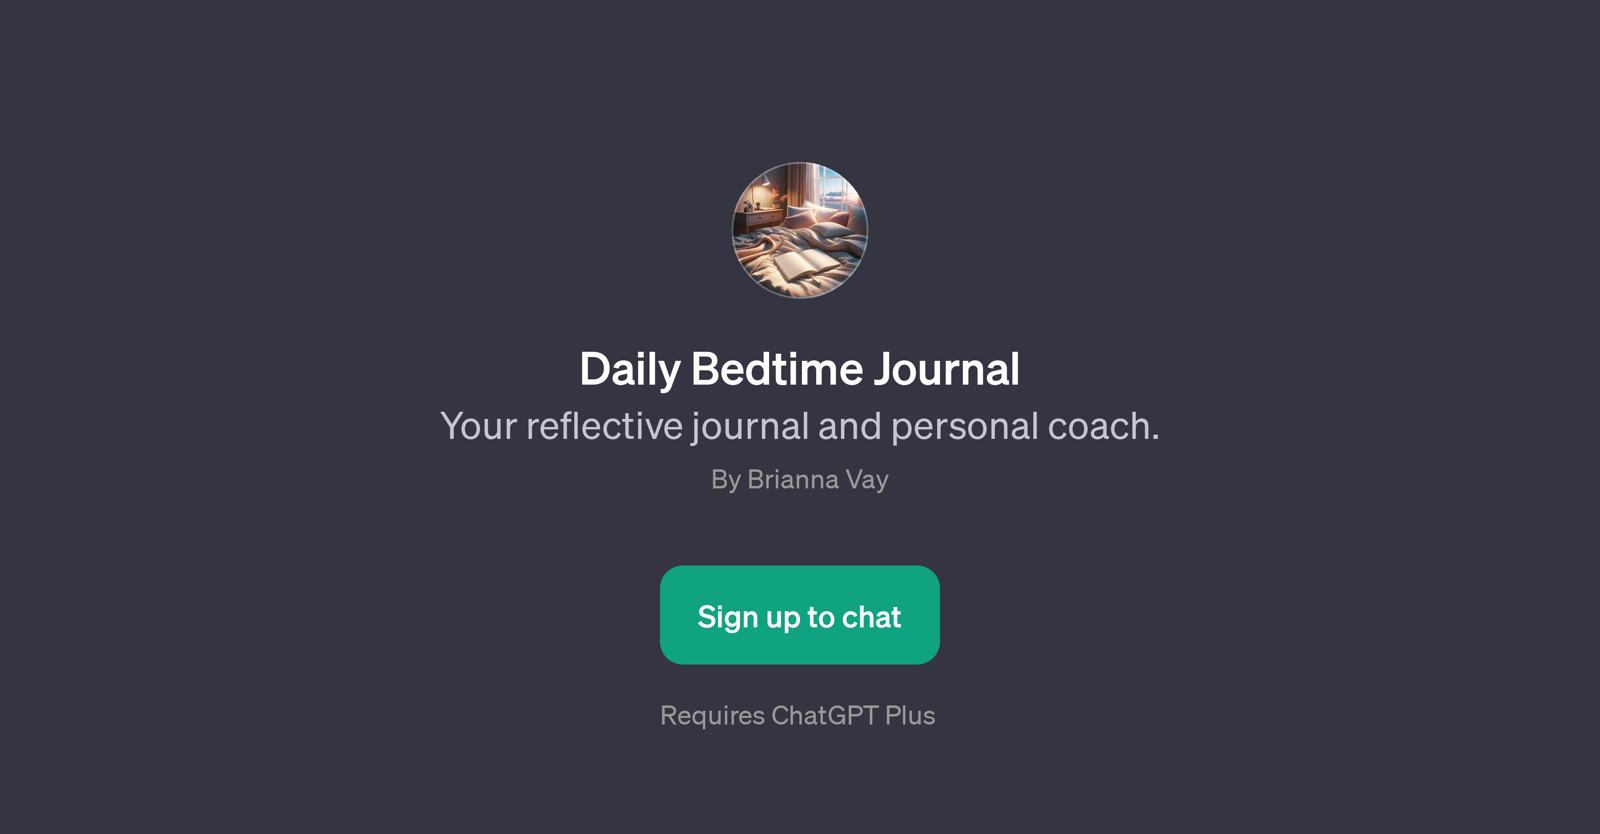 Daily Bedtime Journal website